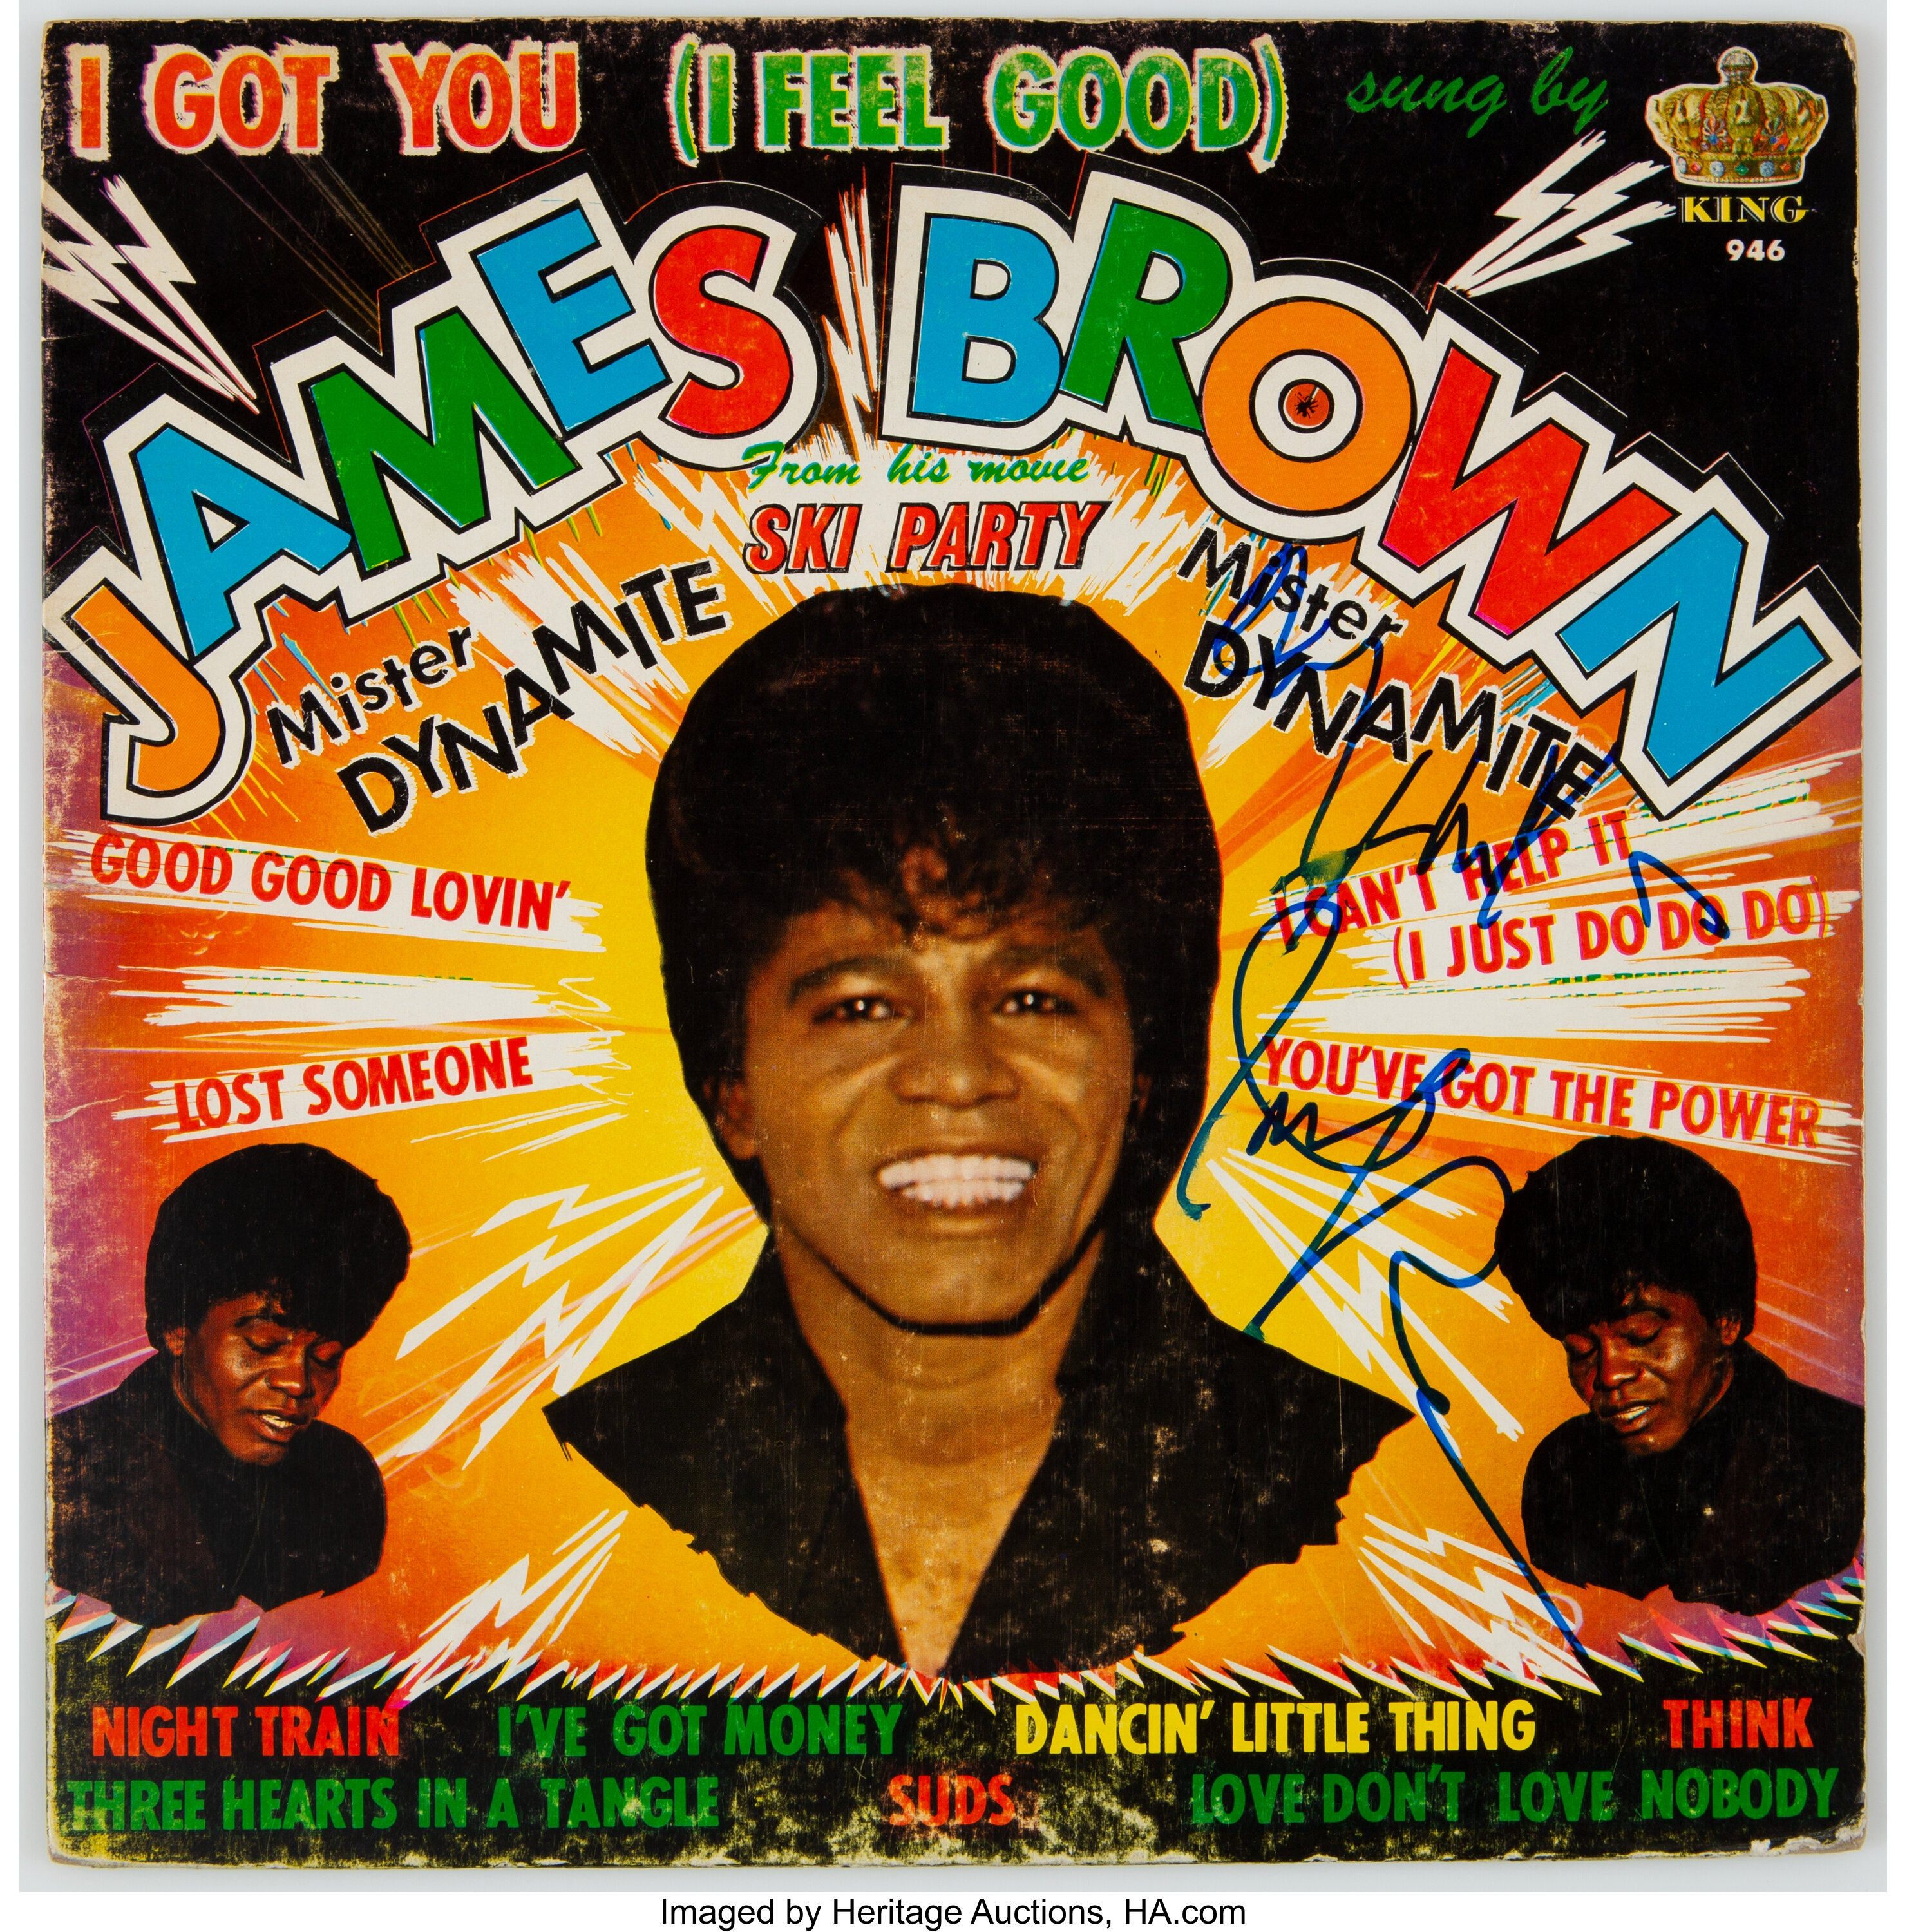 James Brown Signed I Got You Feel Good) Vinyl (King, 946).... | Lot #5518 | Heritage Auctions